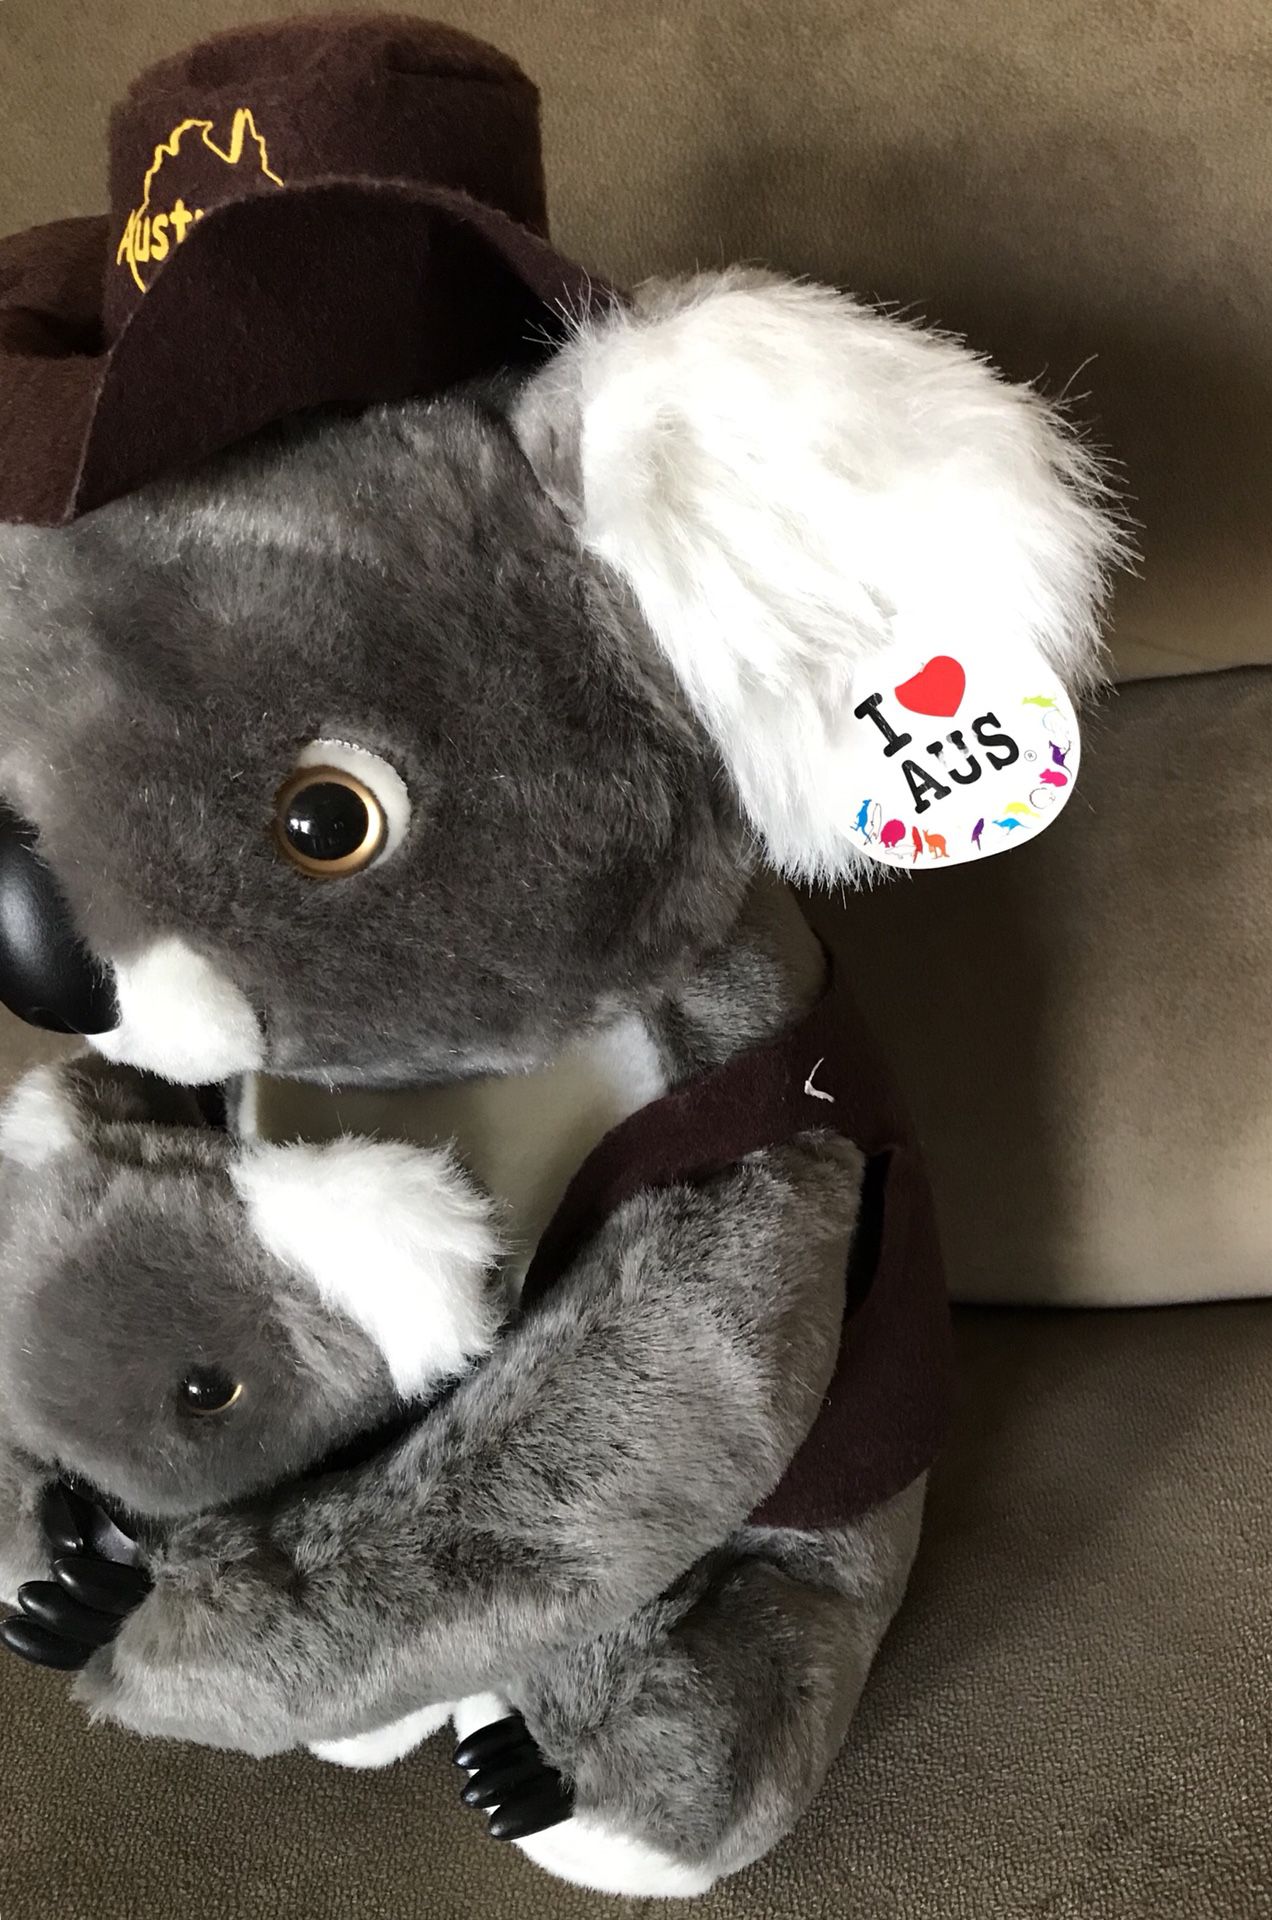 Koala mama bear with baby koala stuffed toy.